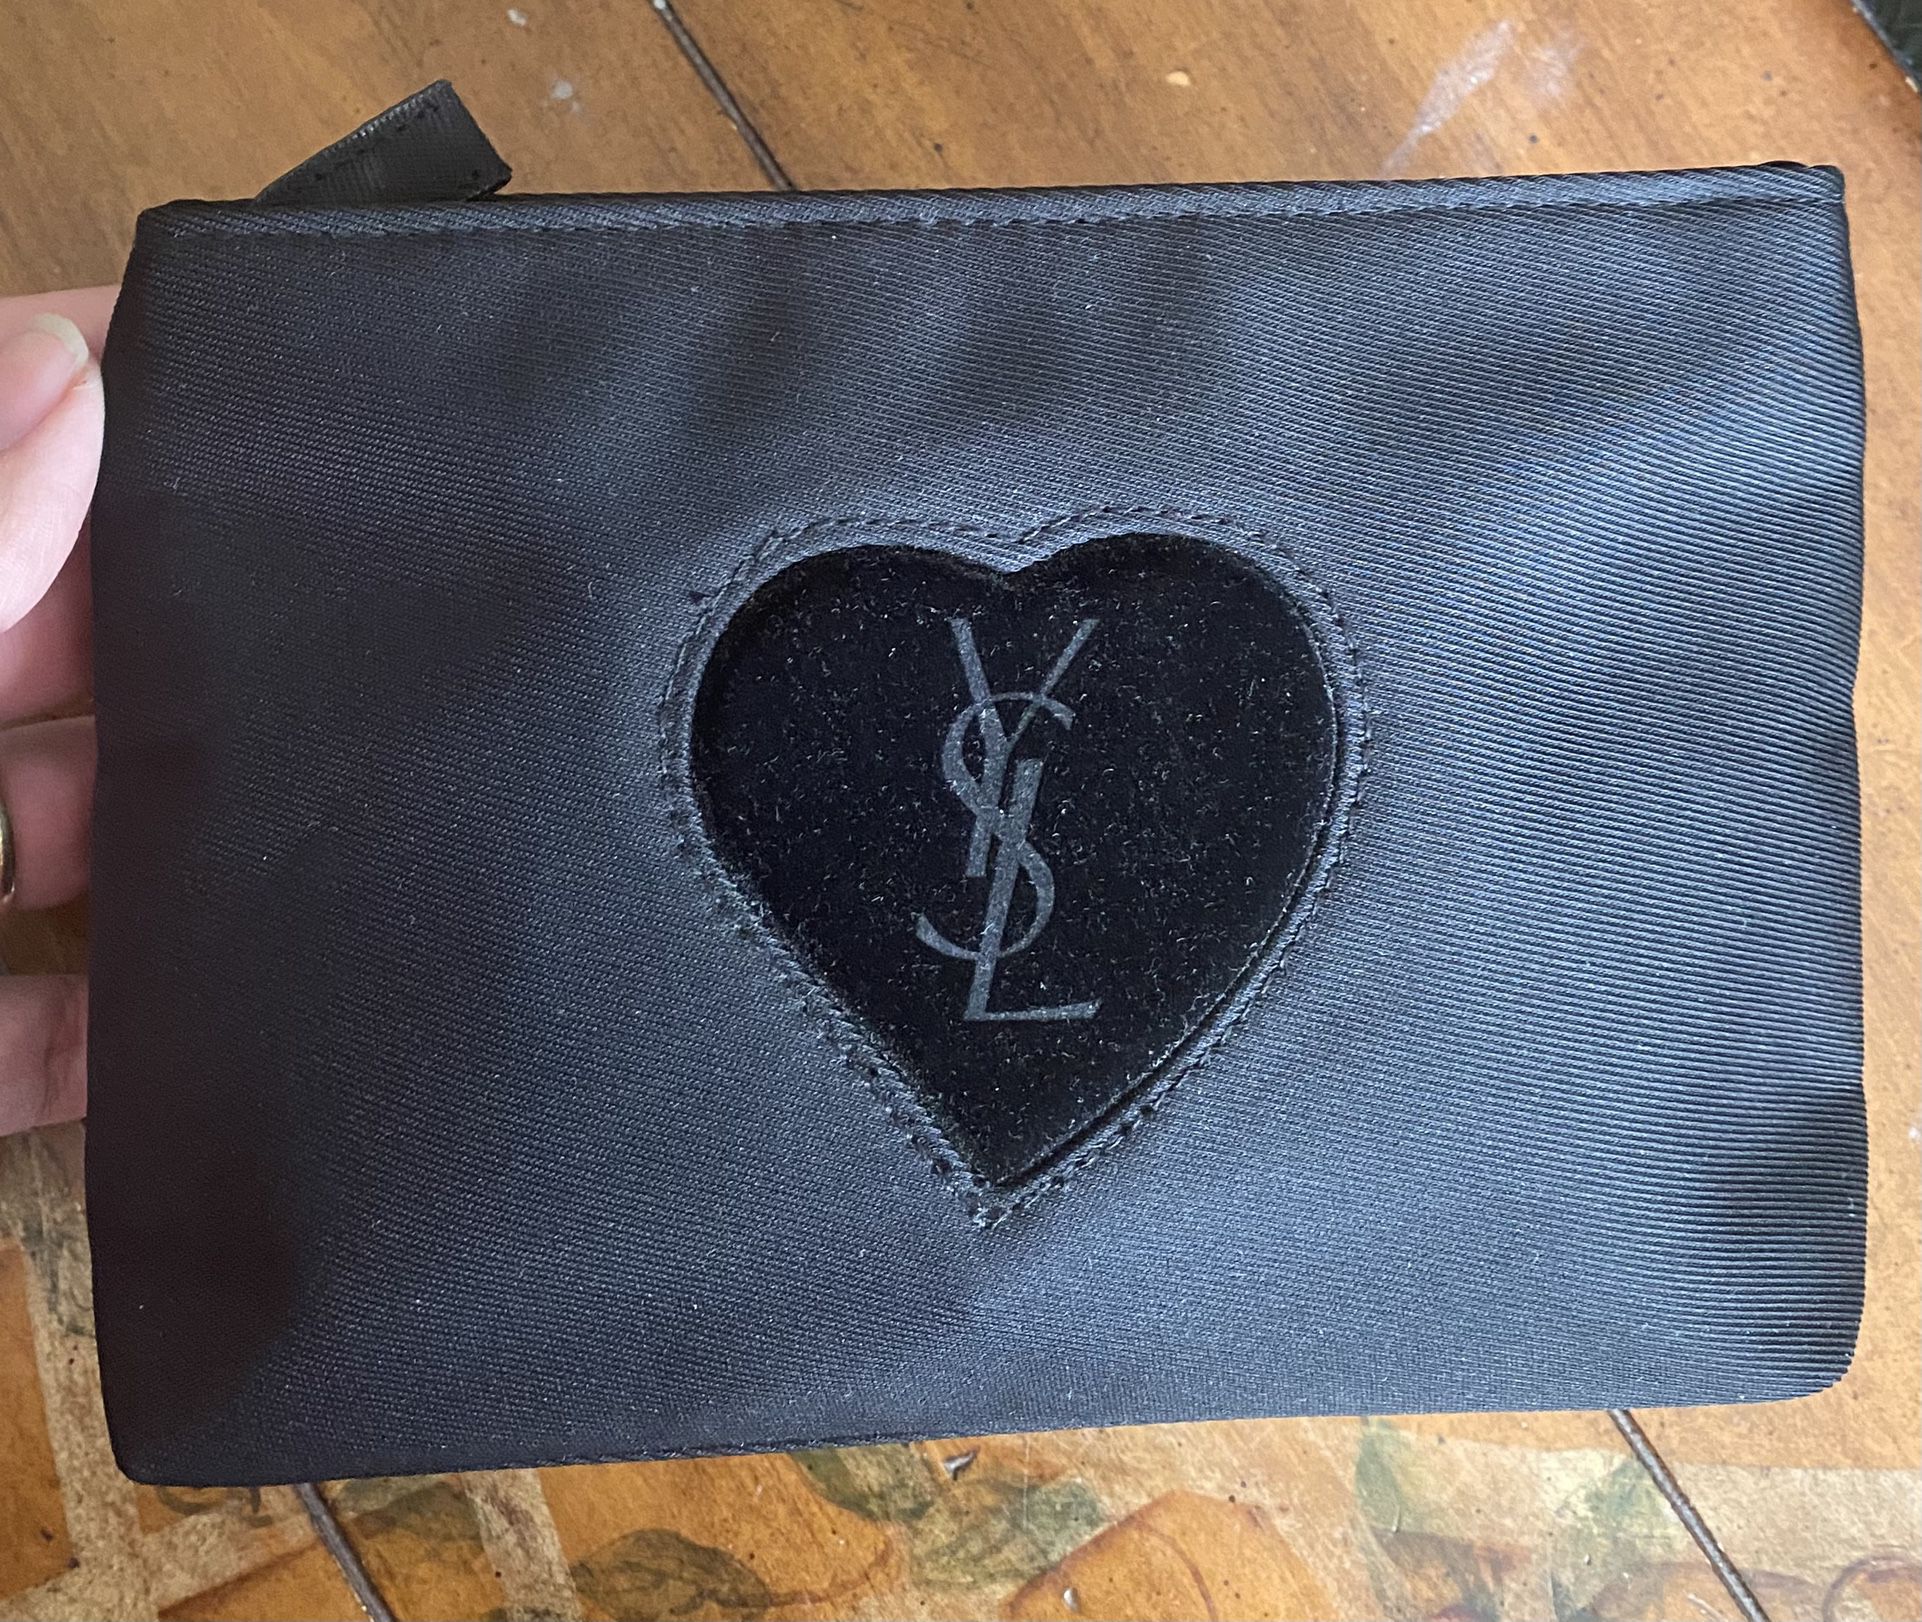 Saint Laurent YSL Heart Logo Makeup Bag for Sale in New York, NY